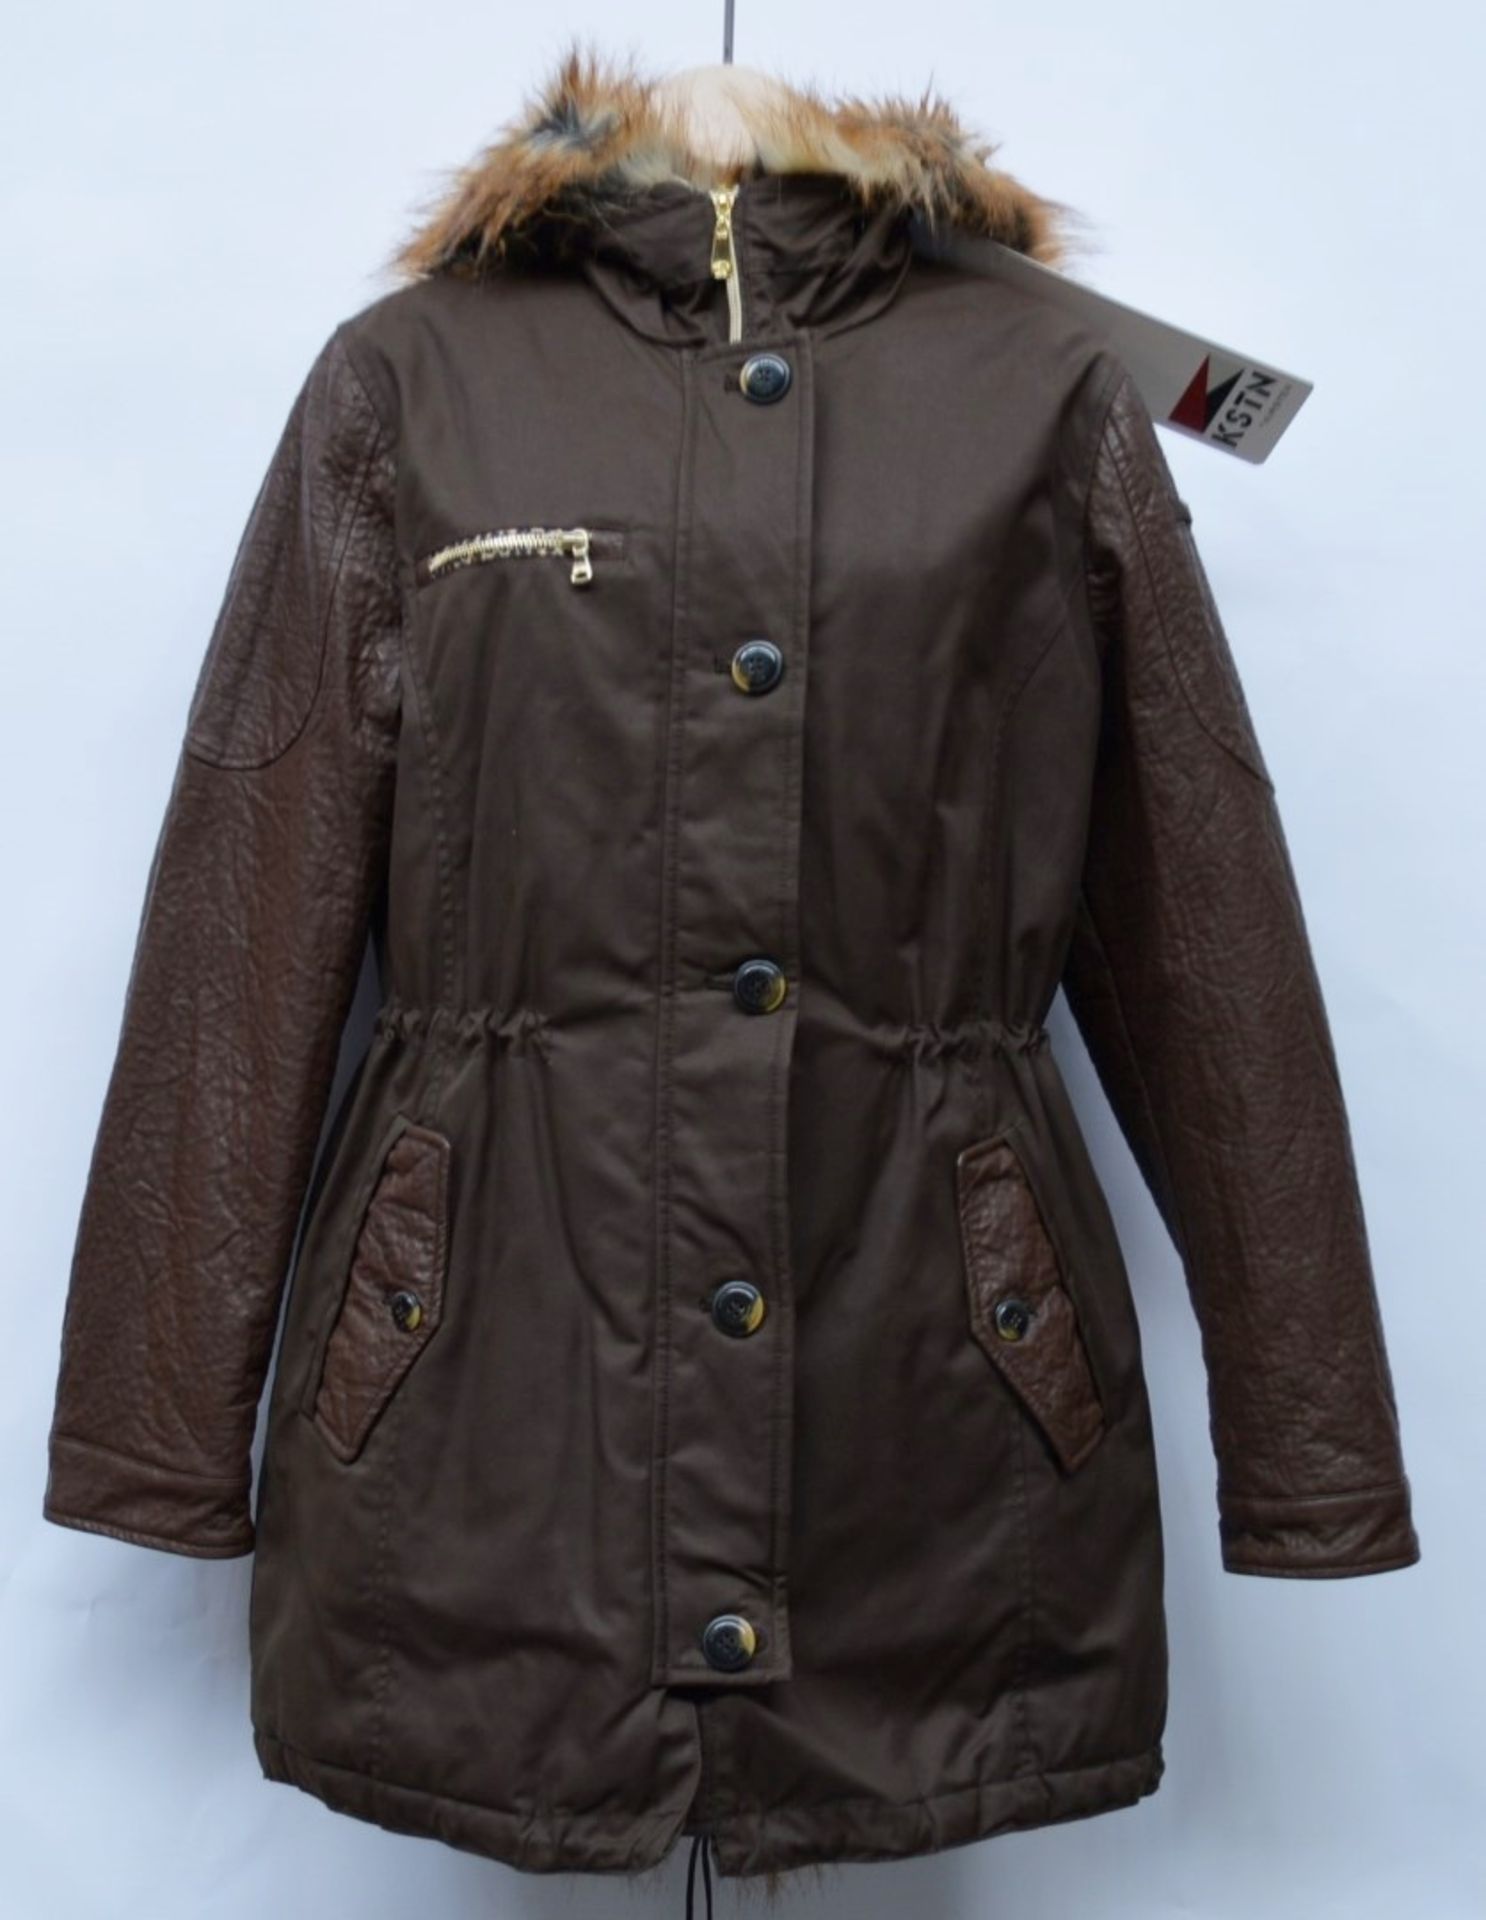 1 x Steilmann KSTN By Kirsten Womens Coat - Hard Wearing Coat With Faux Leather Detail, Drawstring